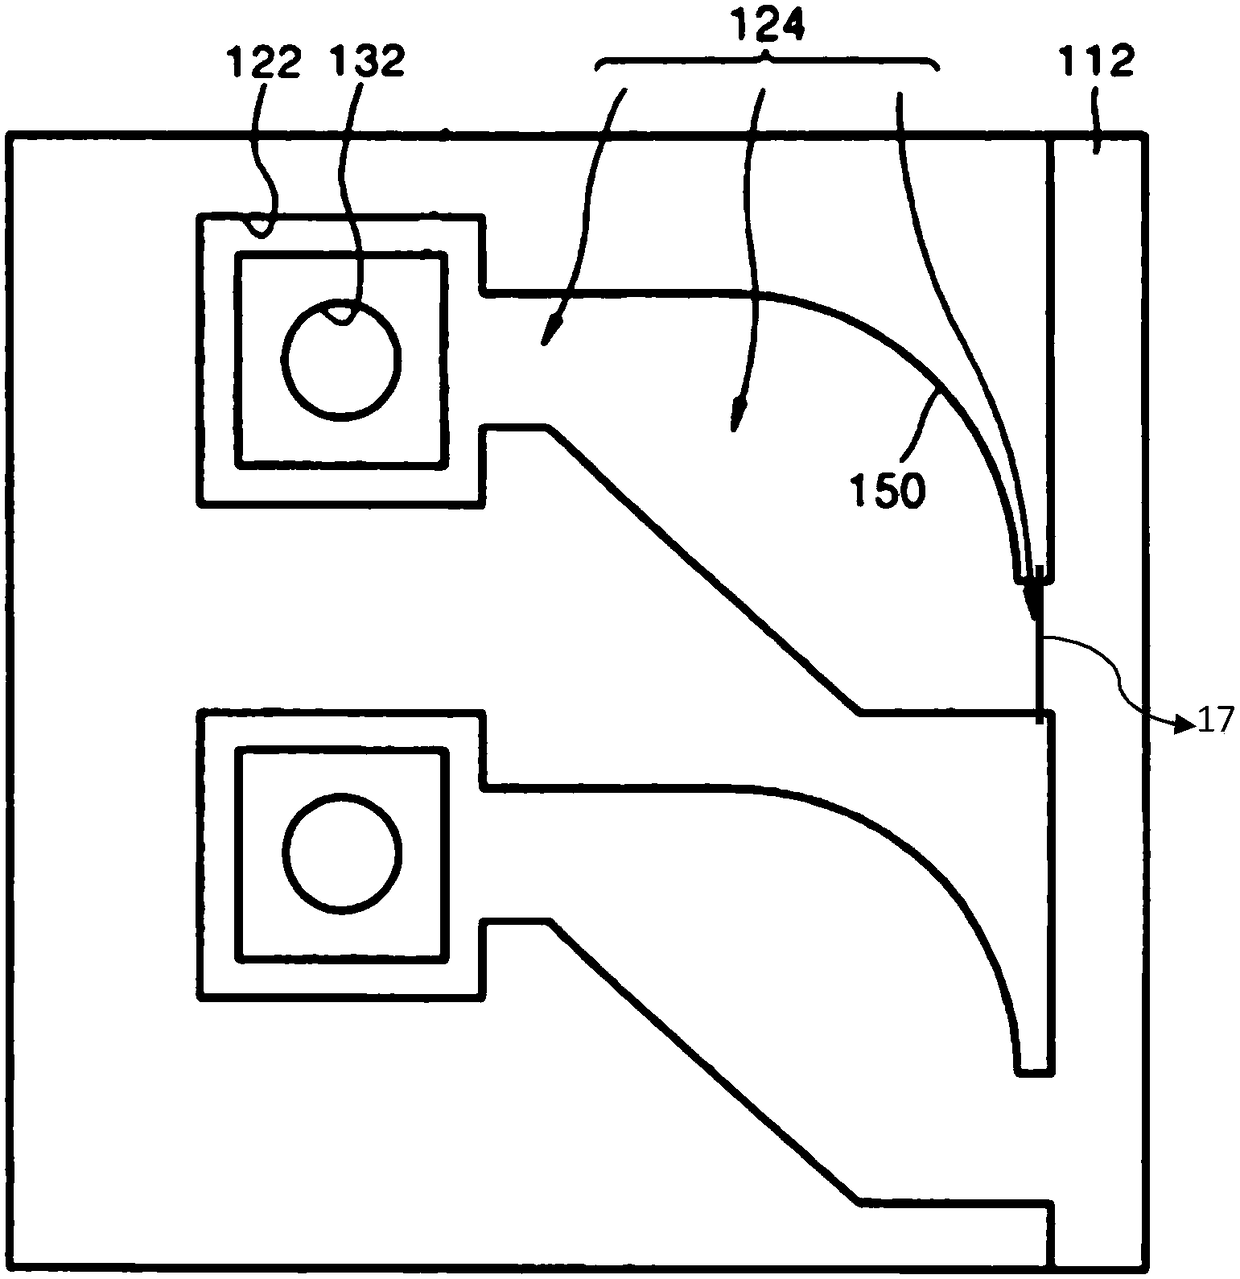 Flow restrictor in micro-droplet jetting printing head